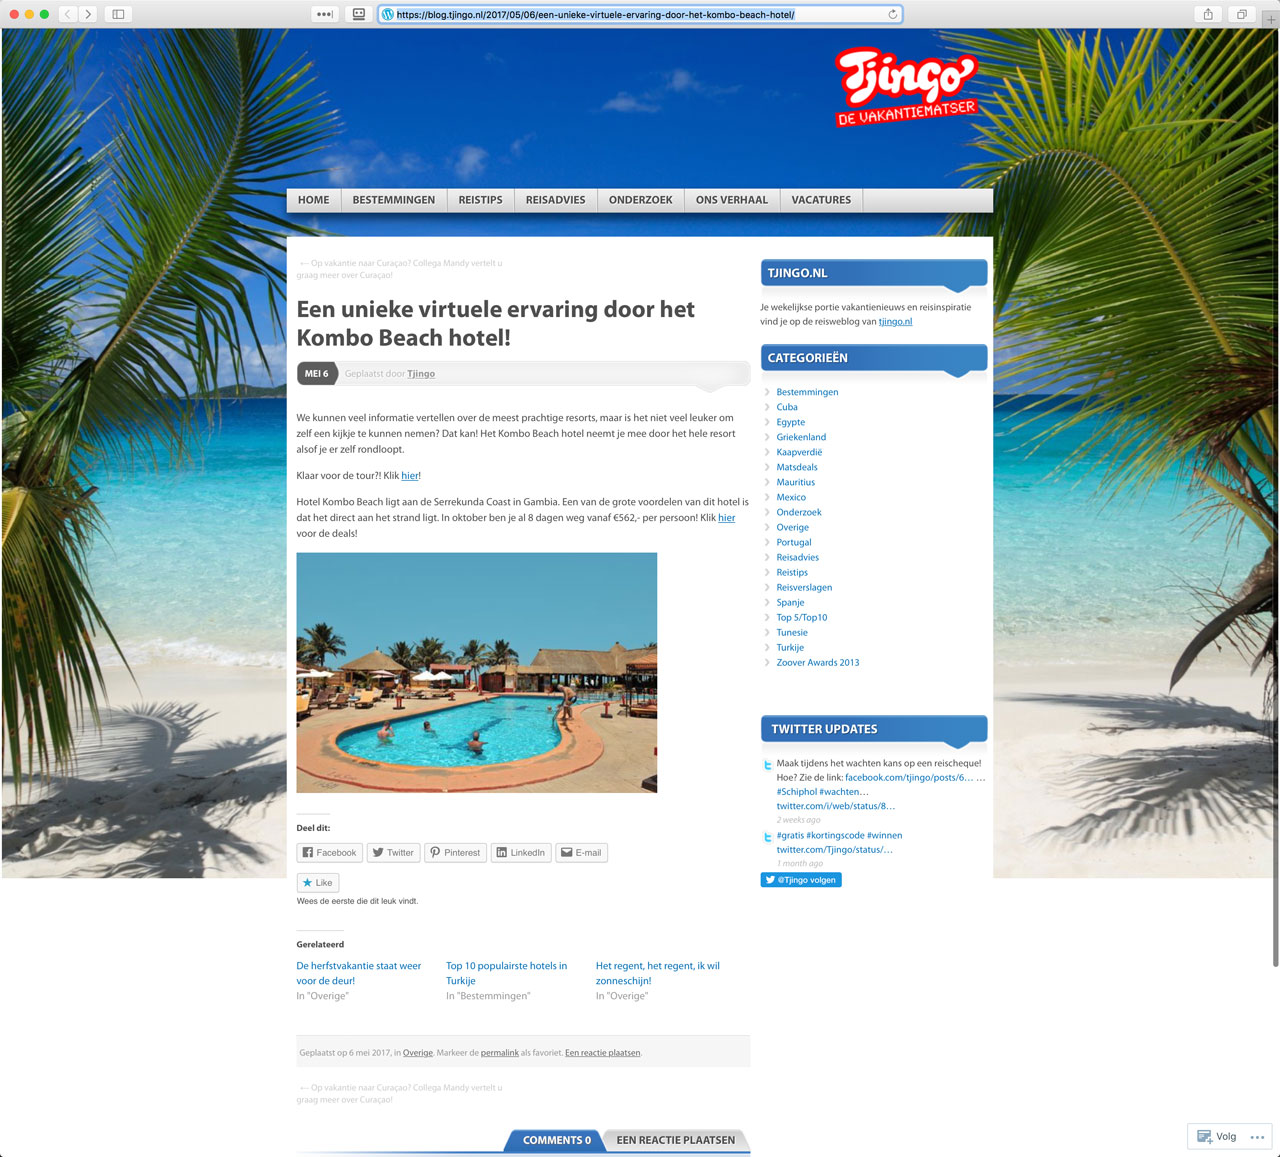 Virtual Tour of Kombo Beach Hotel (Gambia) on Tjingo